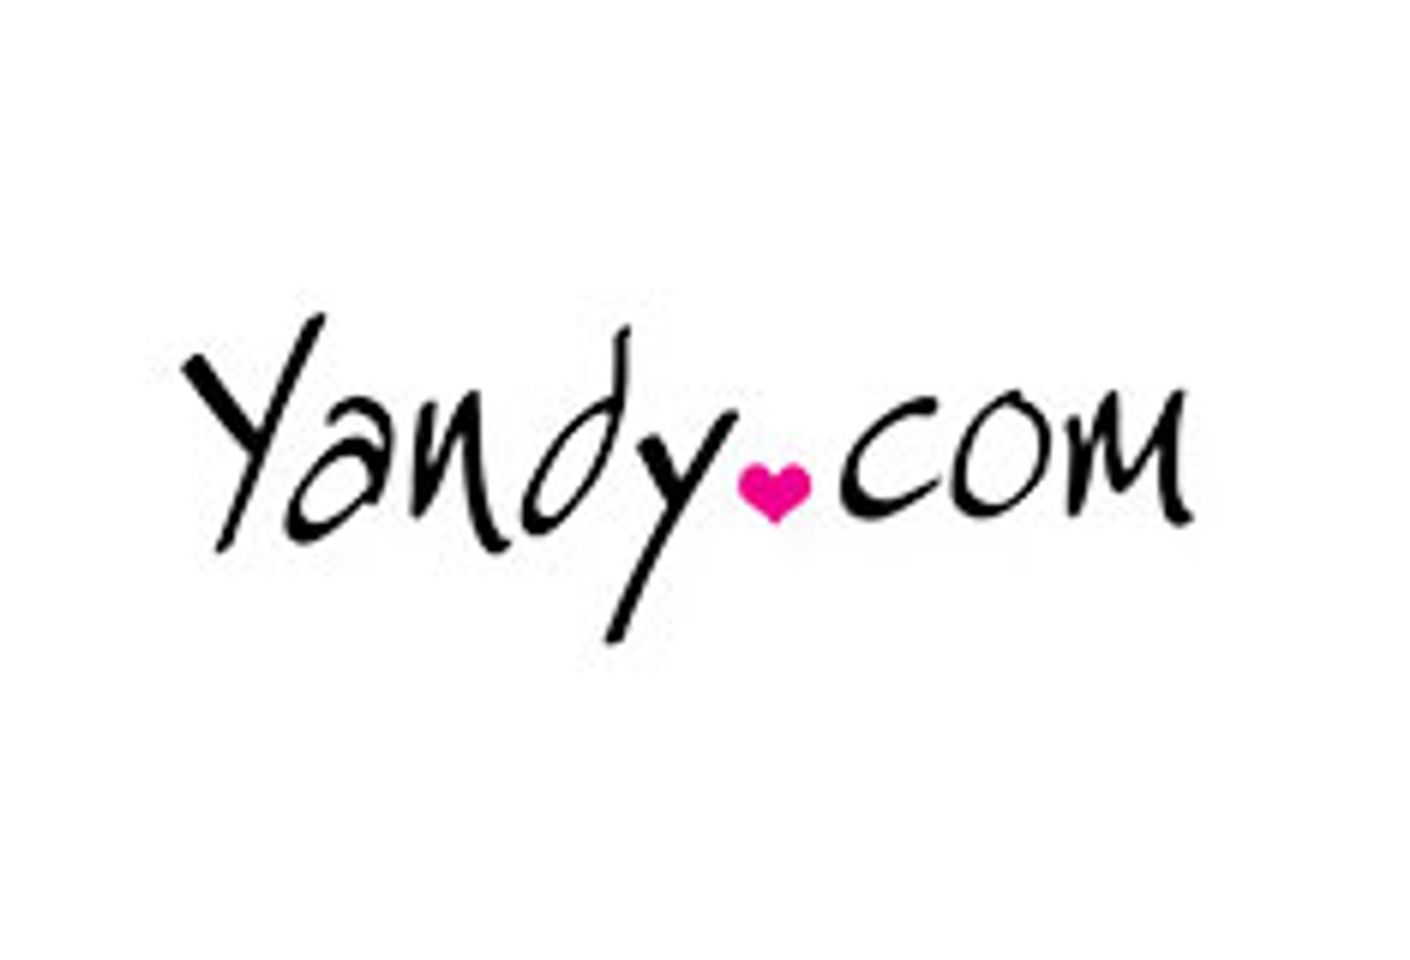 Online Retailer Yandy.com Debuts Bridal Lingerie For Wedding Season